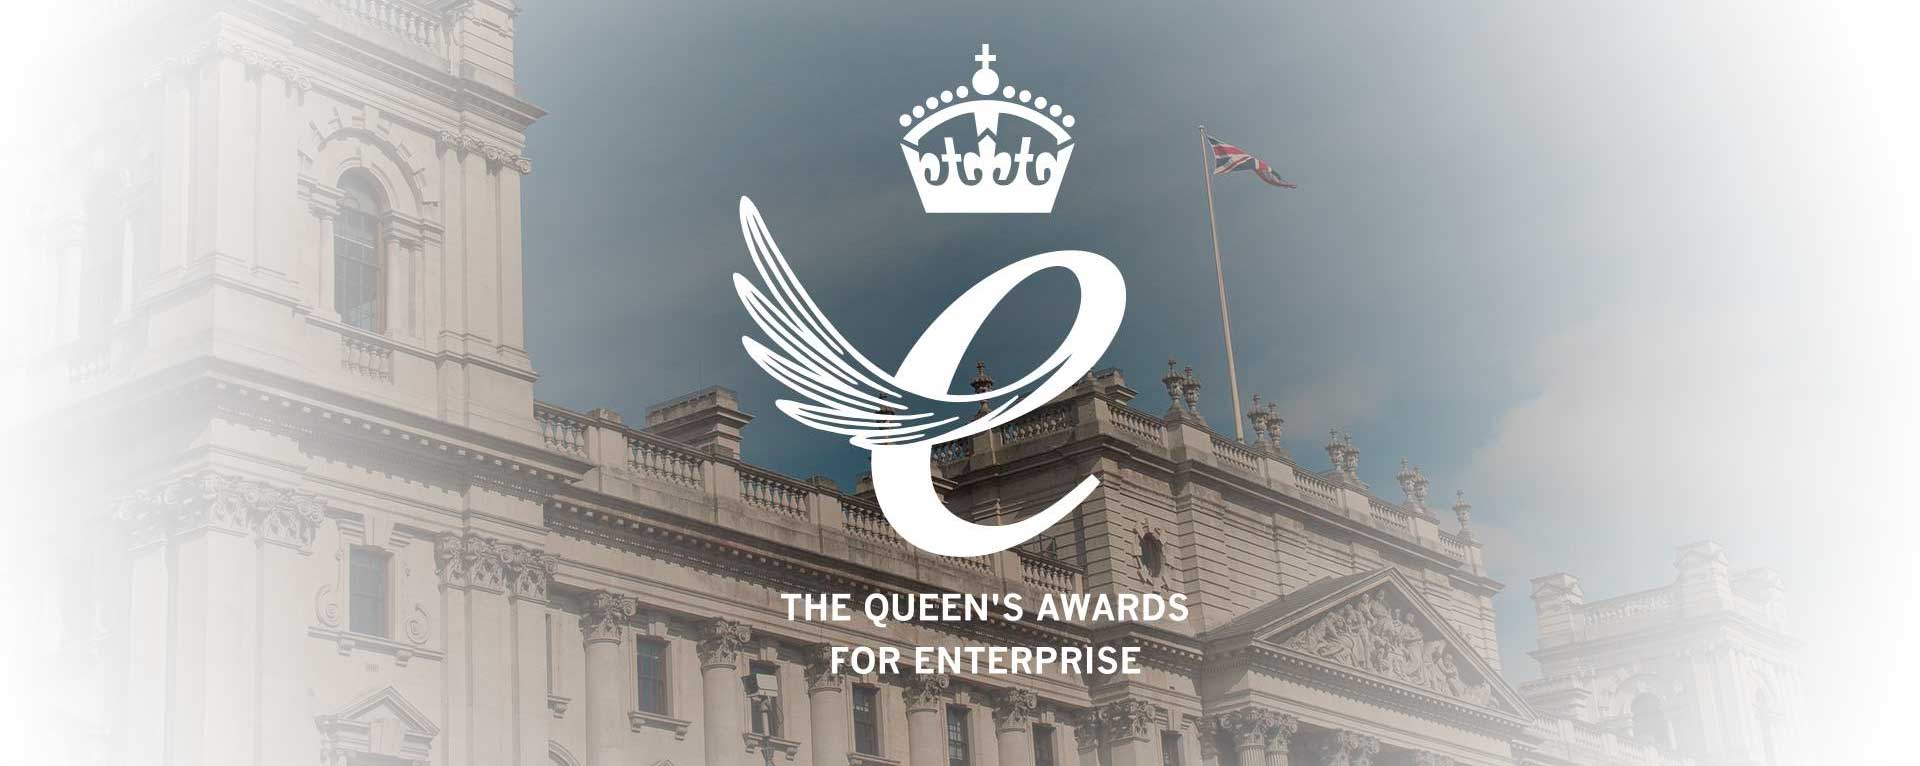 queens award for enterprise international trade